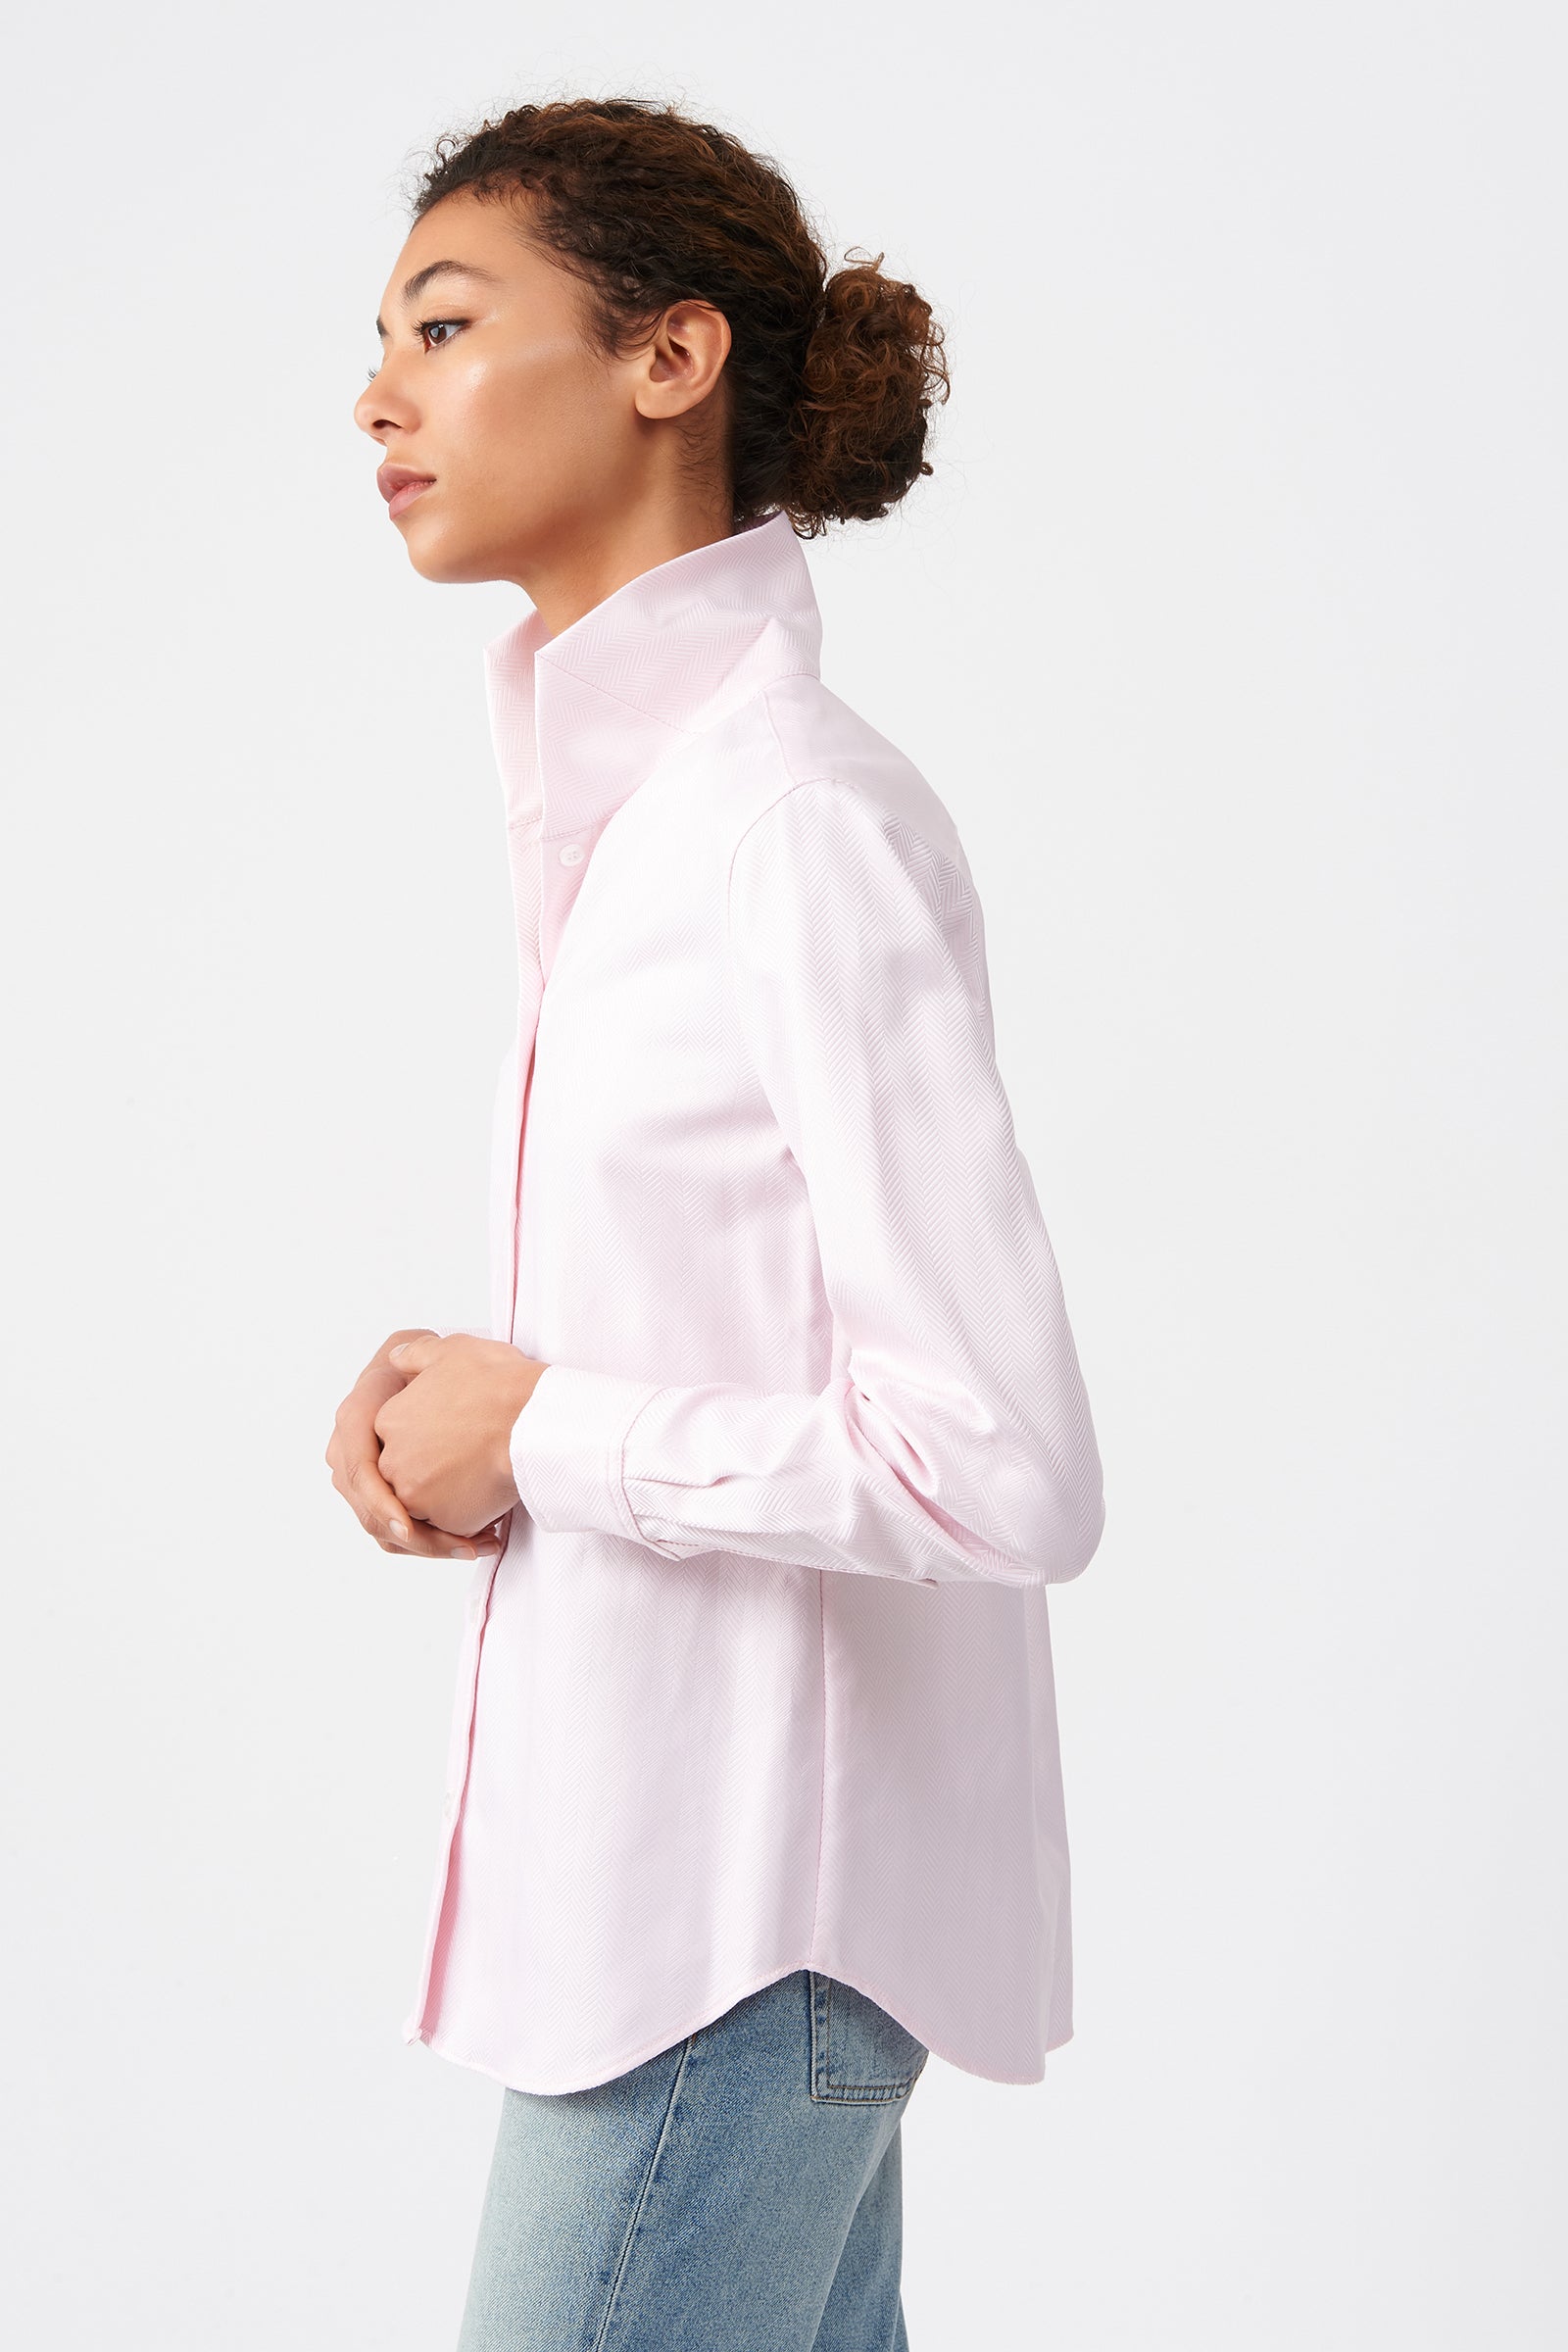 Kal Rieman Ginna Box Pleat Shirt in Pink Herringbone on Model Side Alternate View